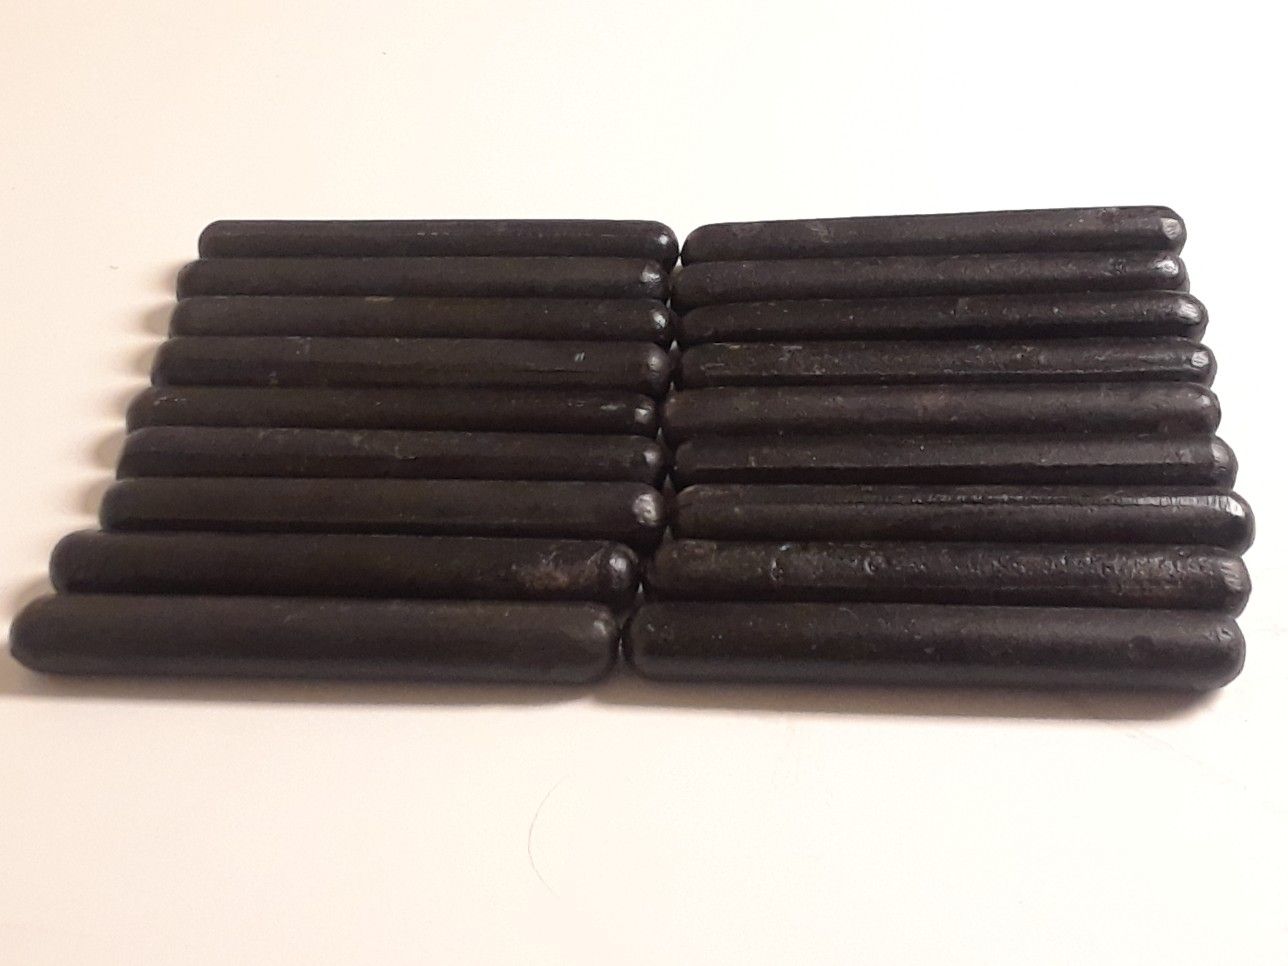 10lbs total (20) 8oz black lead cigar shaped weights